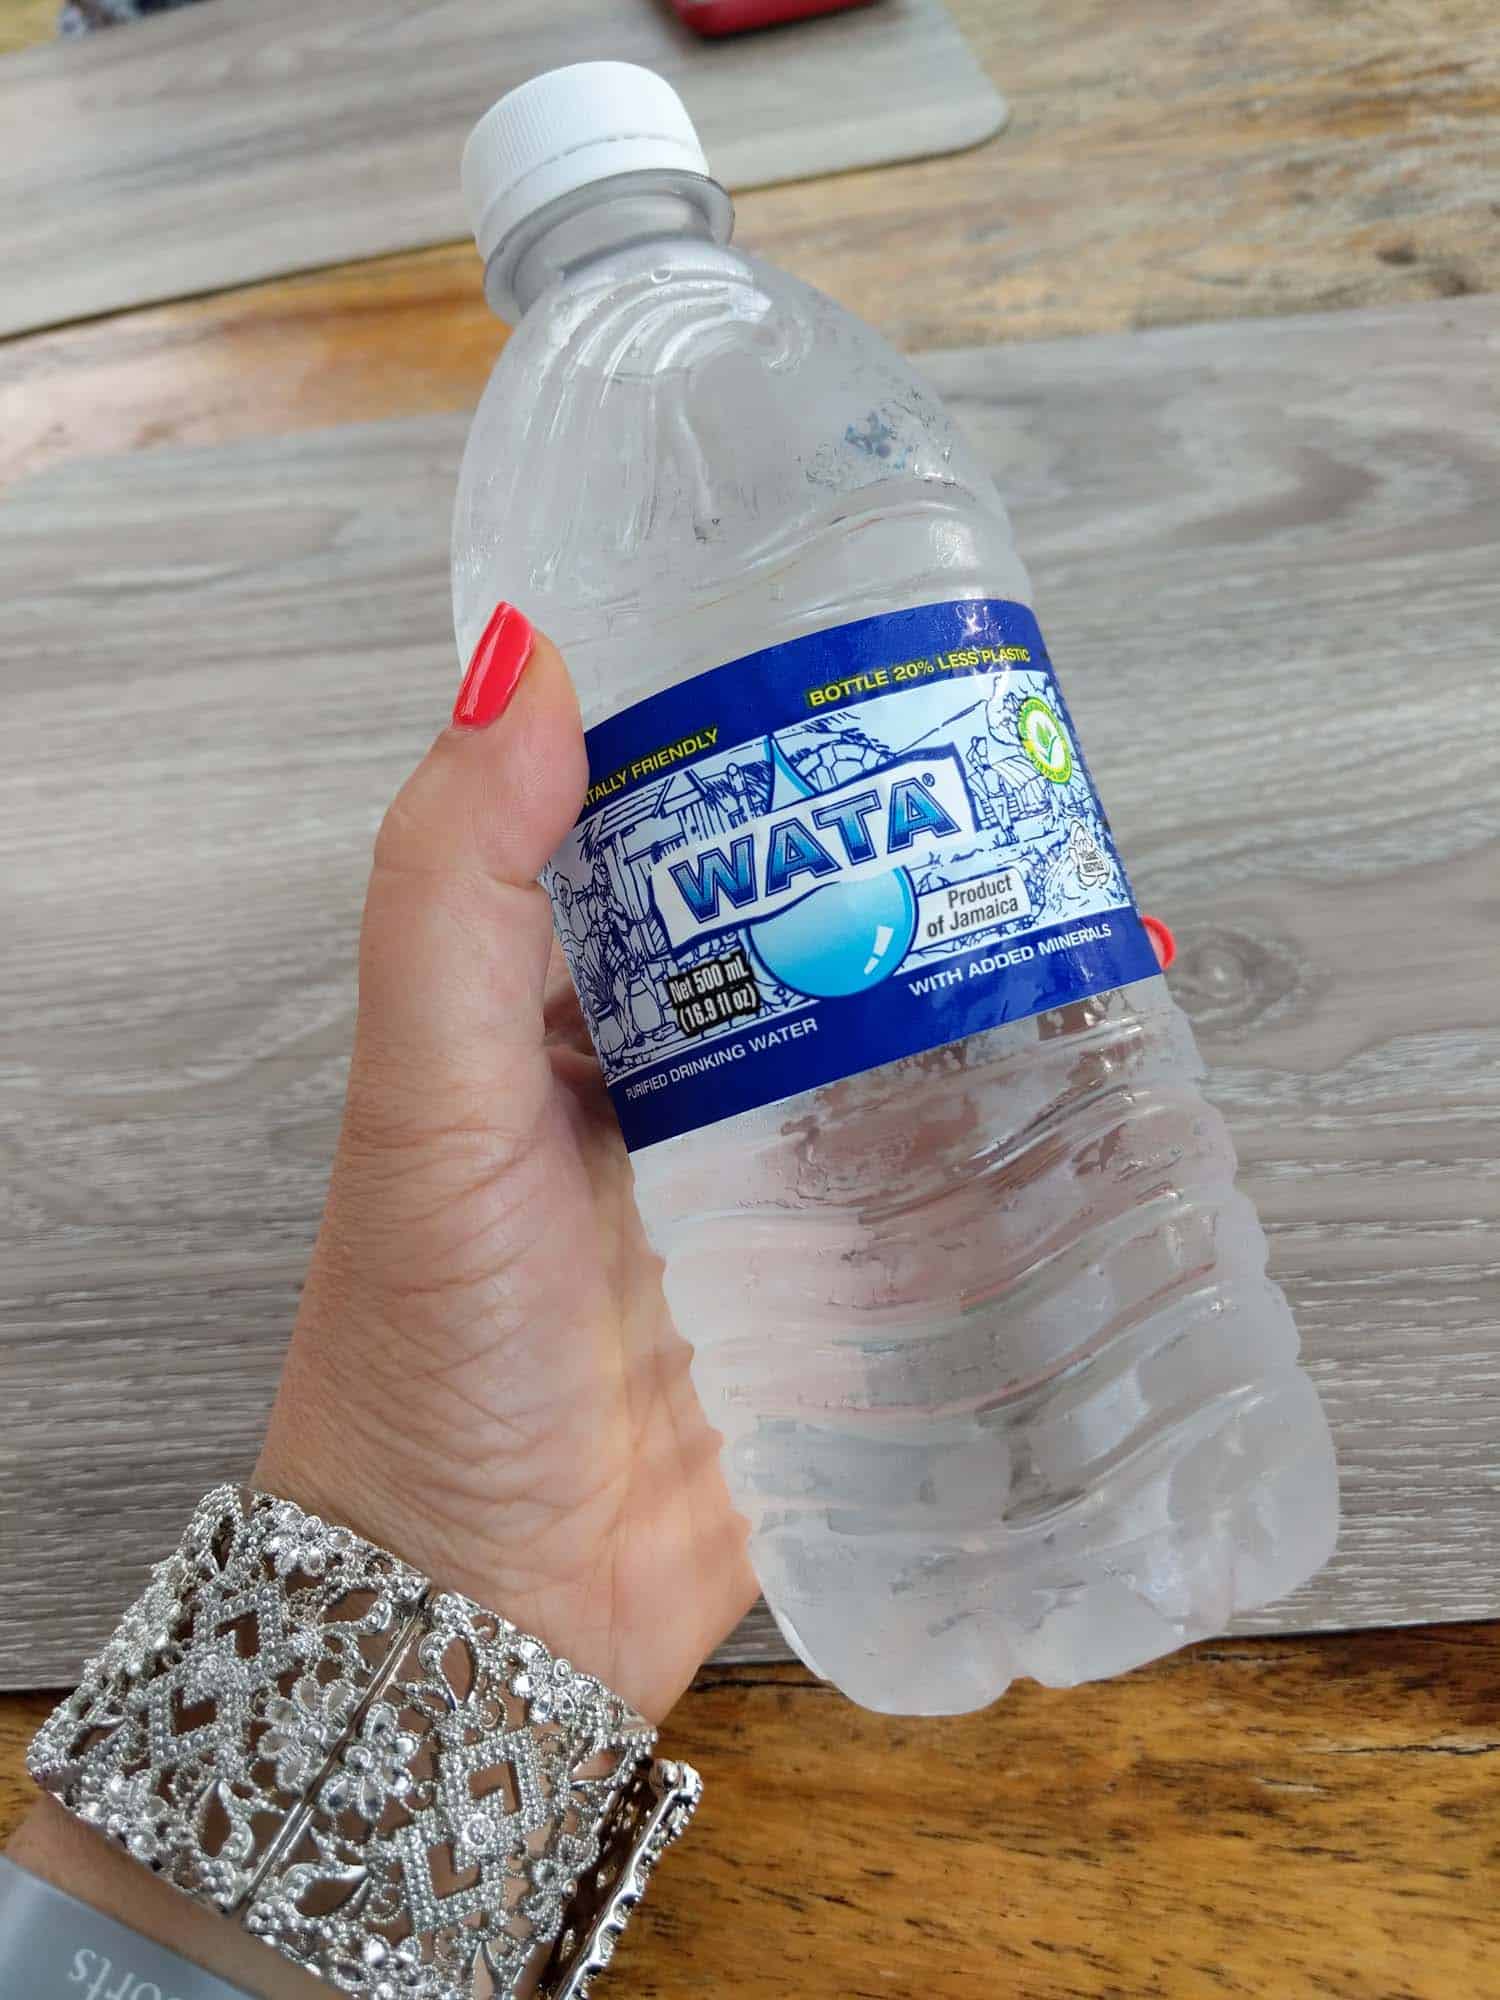 Drinks in Jamaica, bottle water is called wata